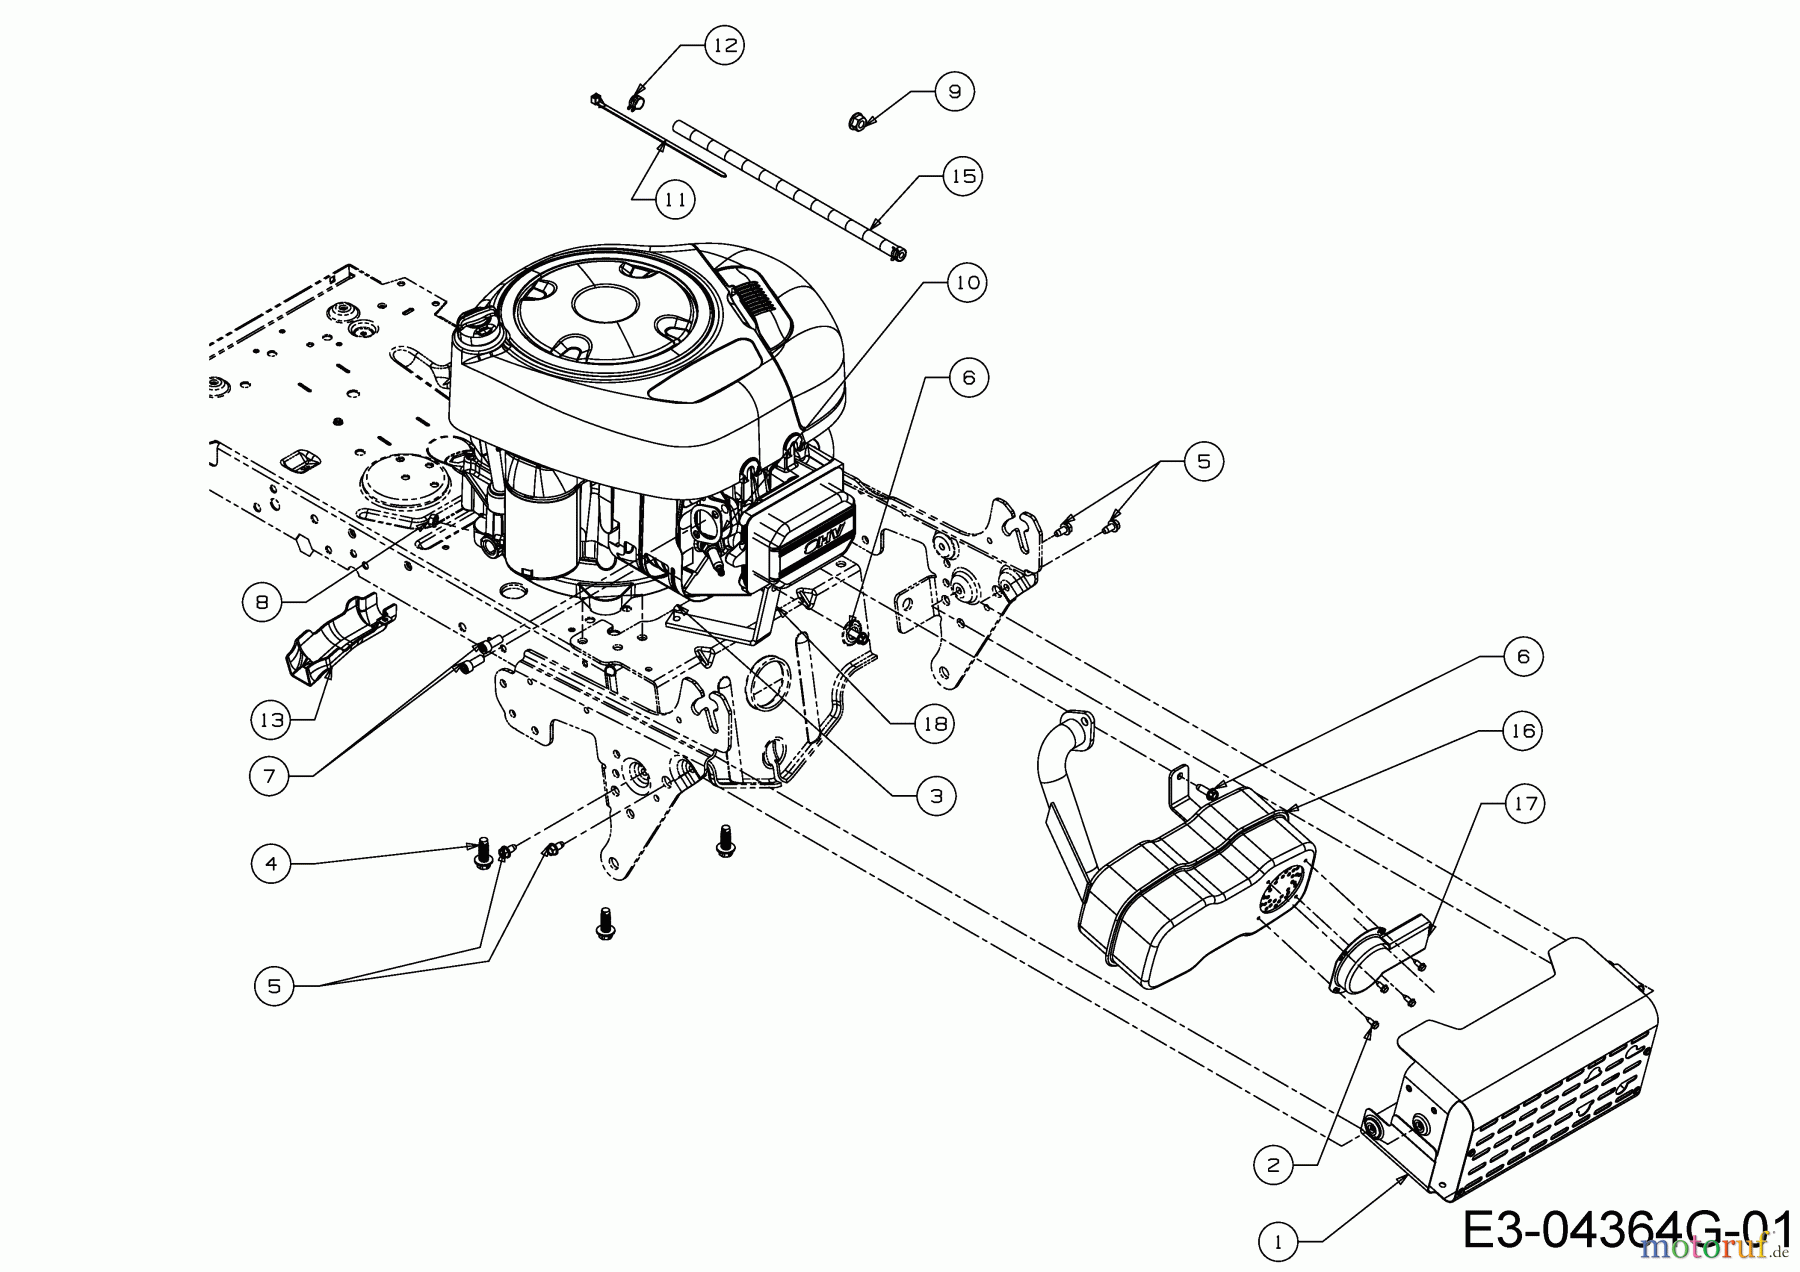  Dormak Lawn tractors TX 36 T 13HH76SE699  (2017) Engine accessories